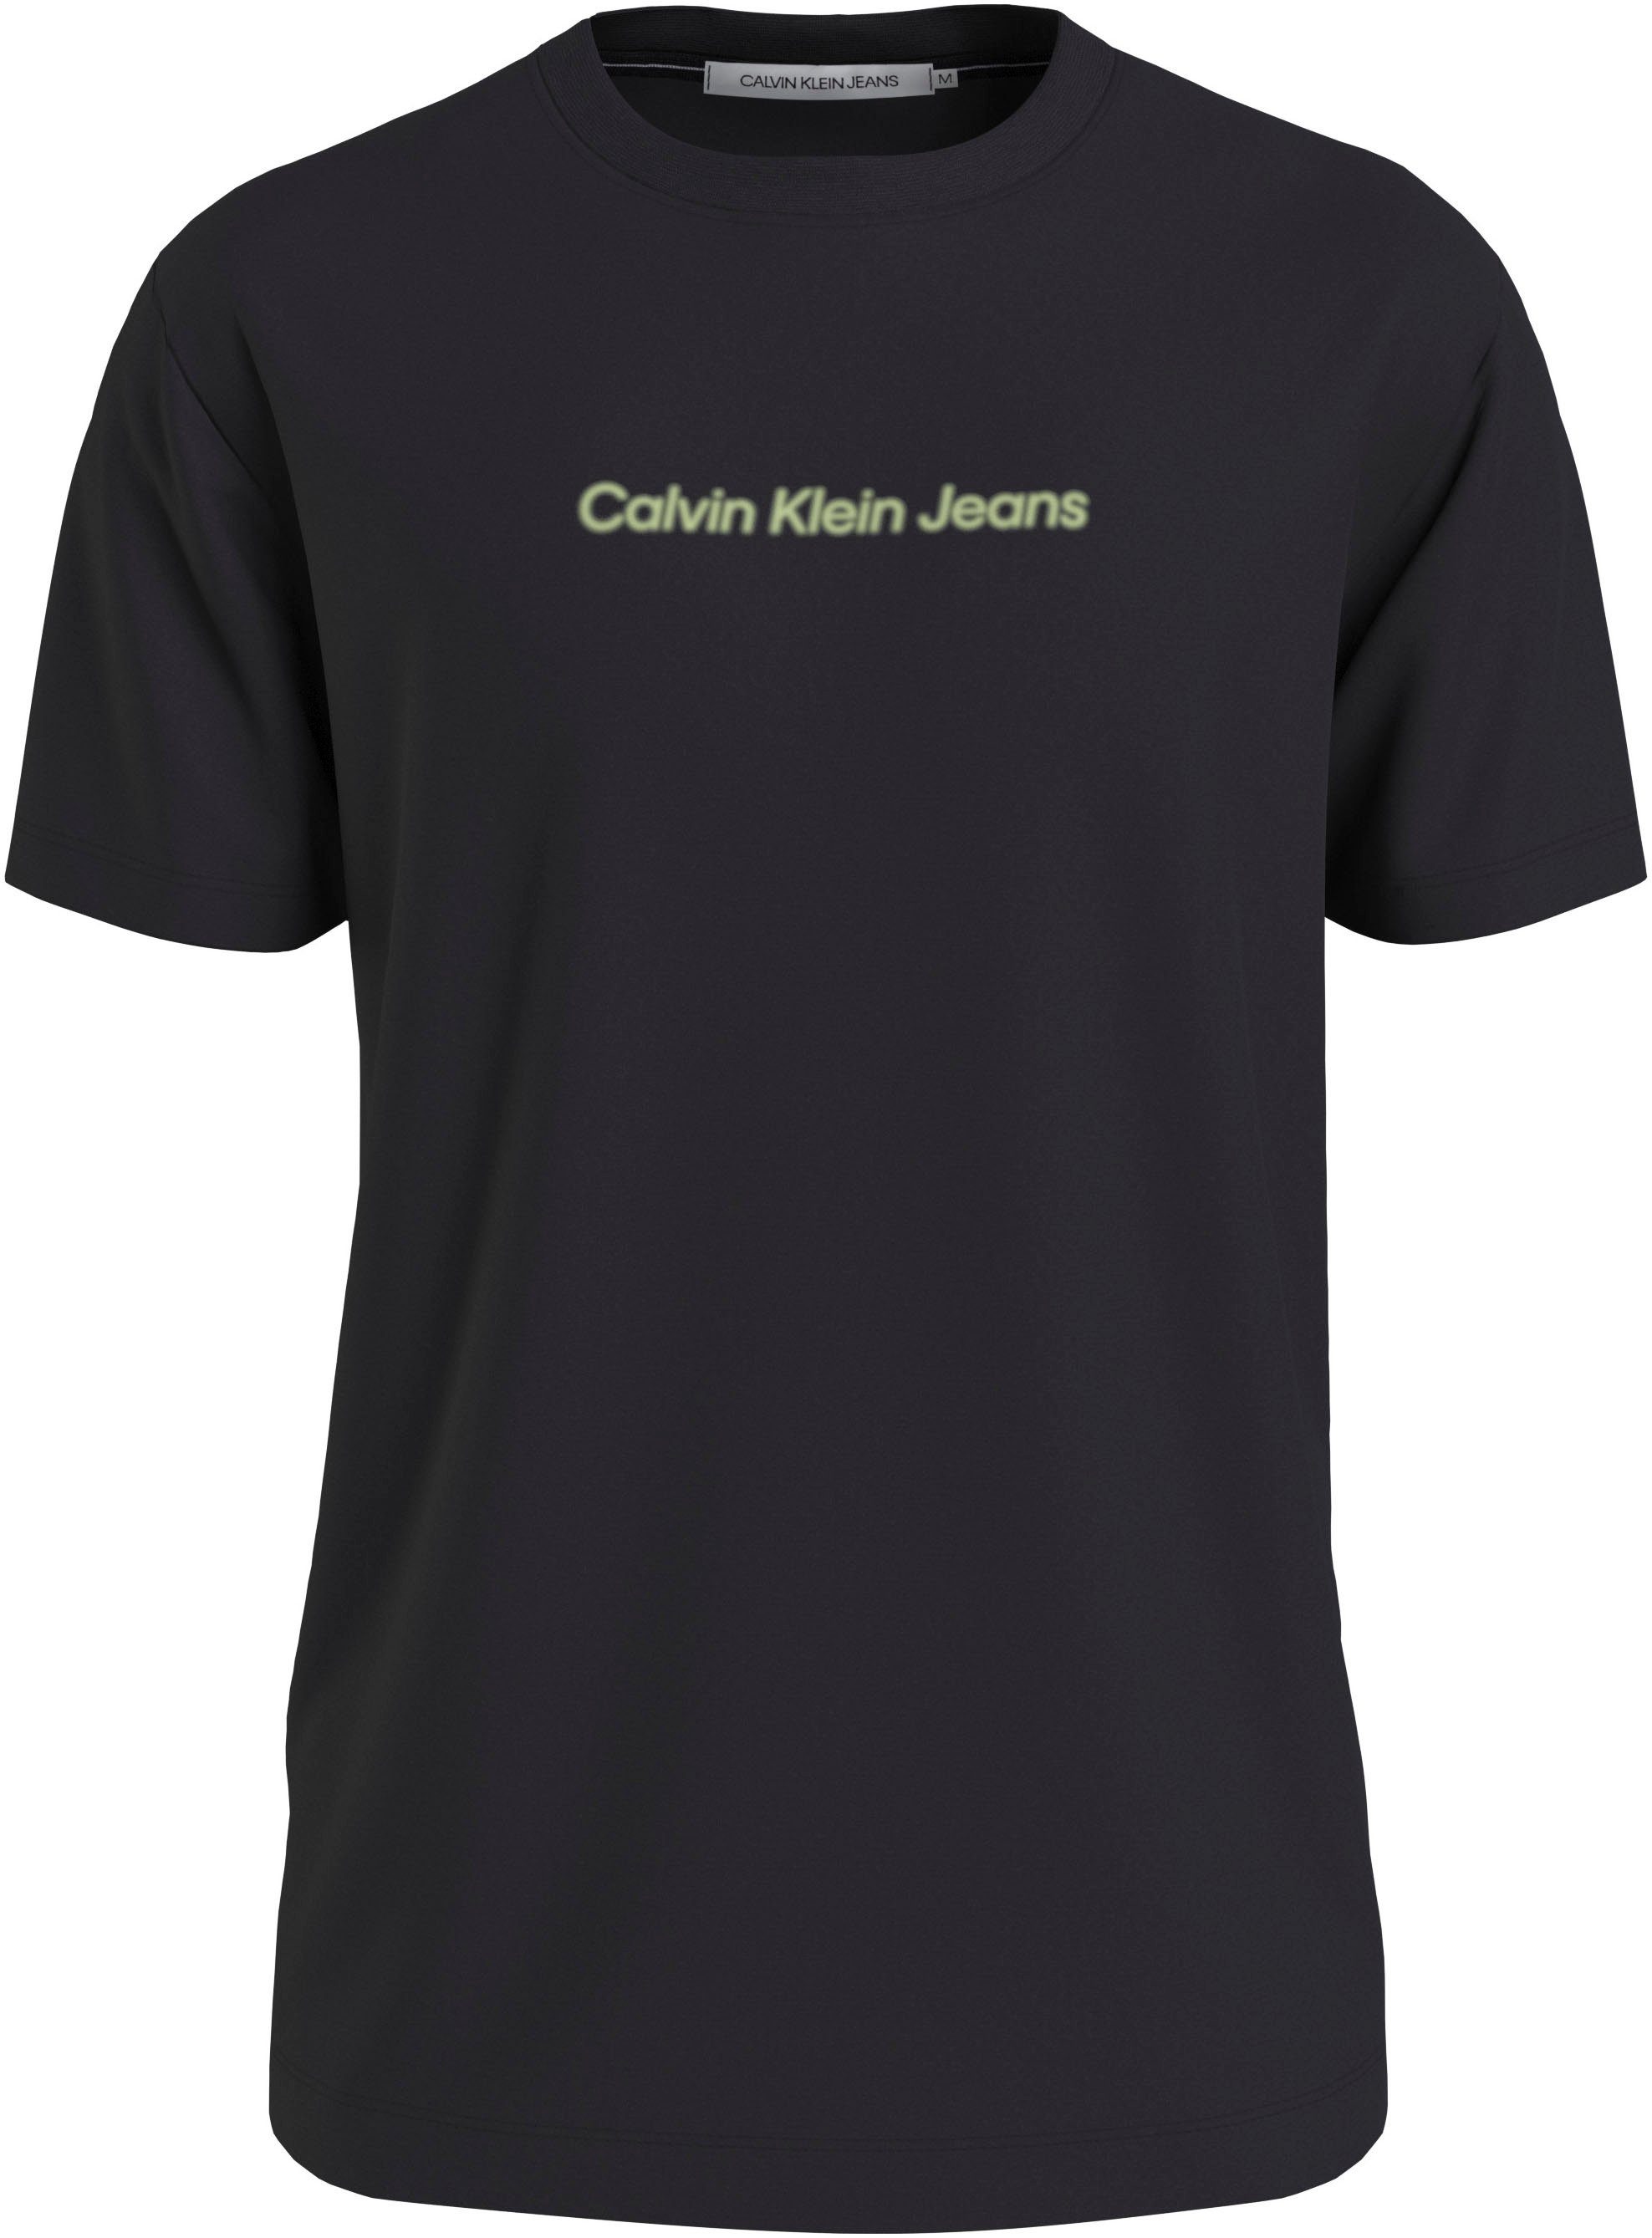 CK Black Calvin T-Shirt Ck Klein Jeans LOGO MIRRORED TEE